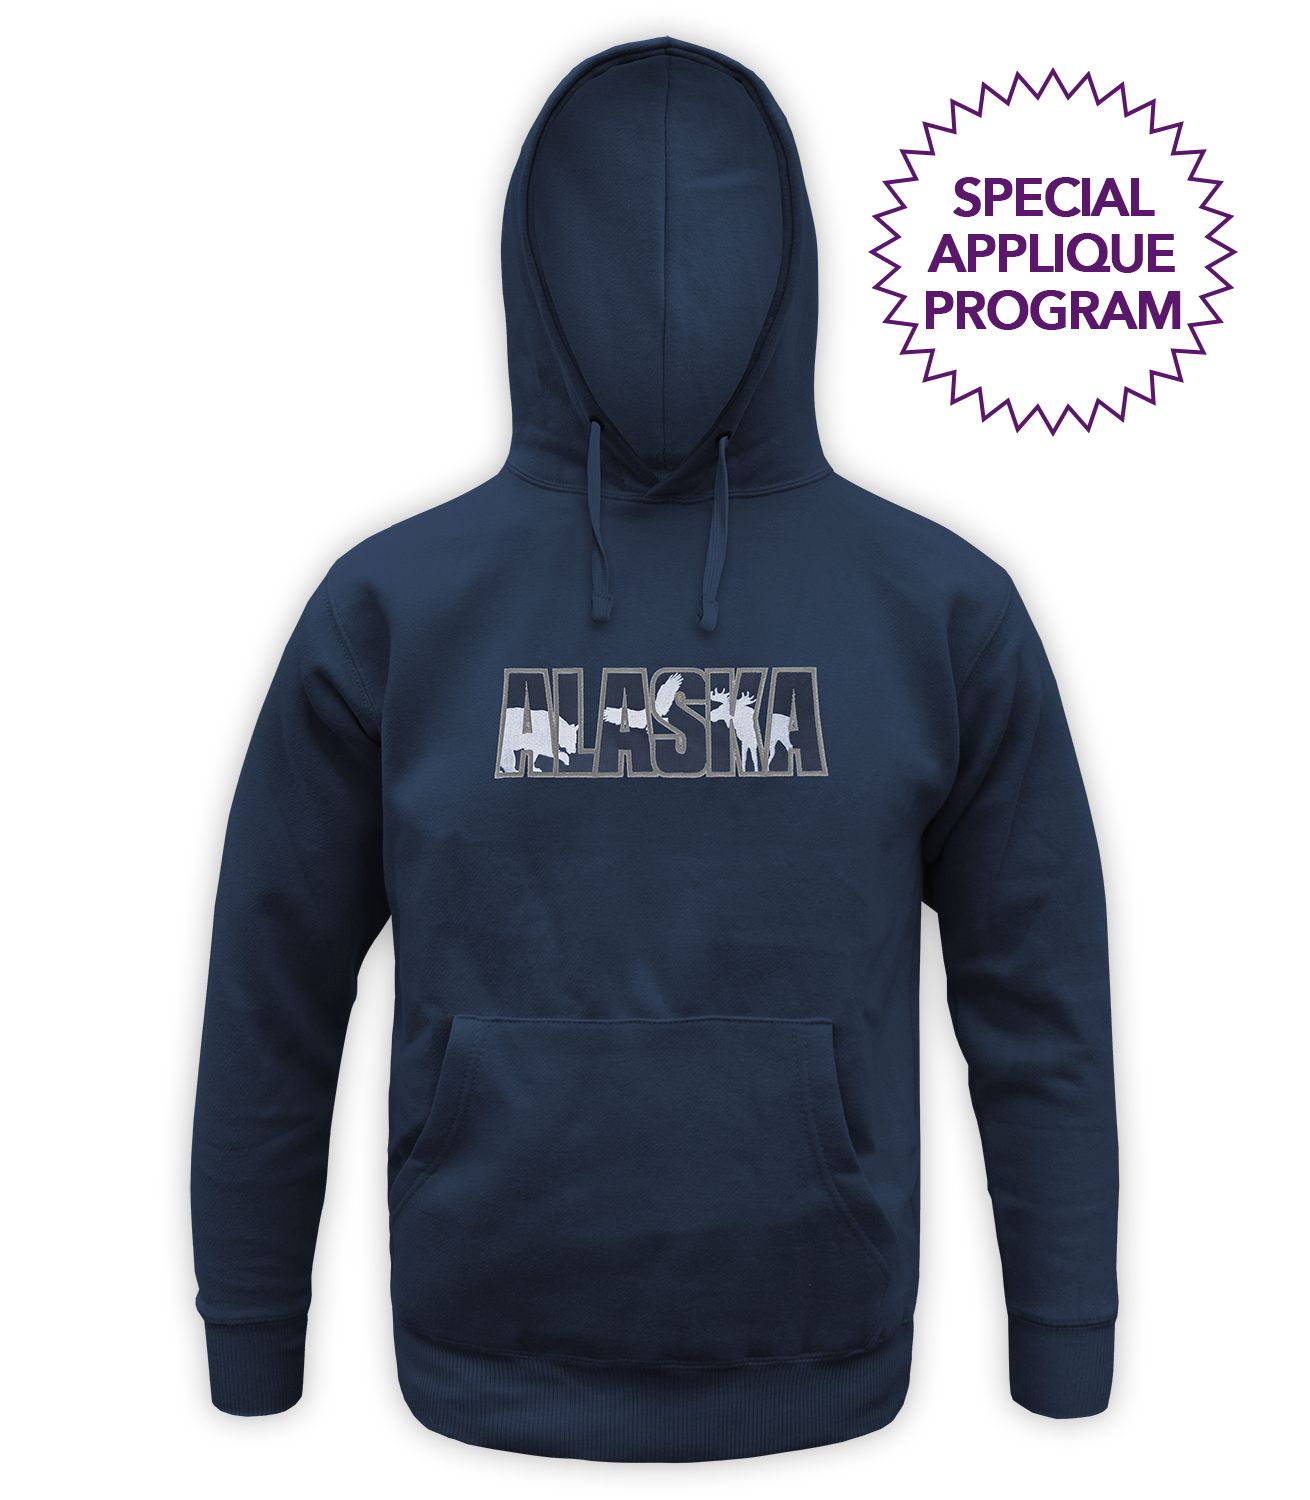 renegade wholesale hoodies special applique program, navy hooded pullover, bear, eagle moose, alaska, wholesale hoodie applique